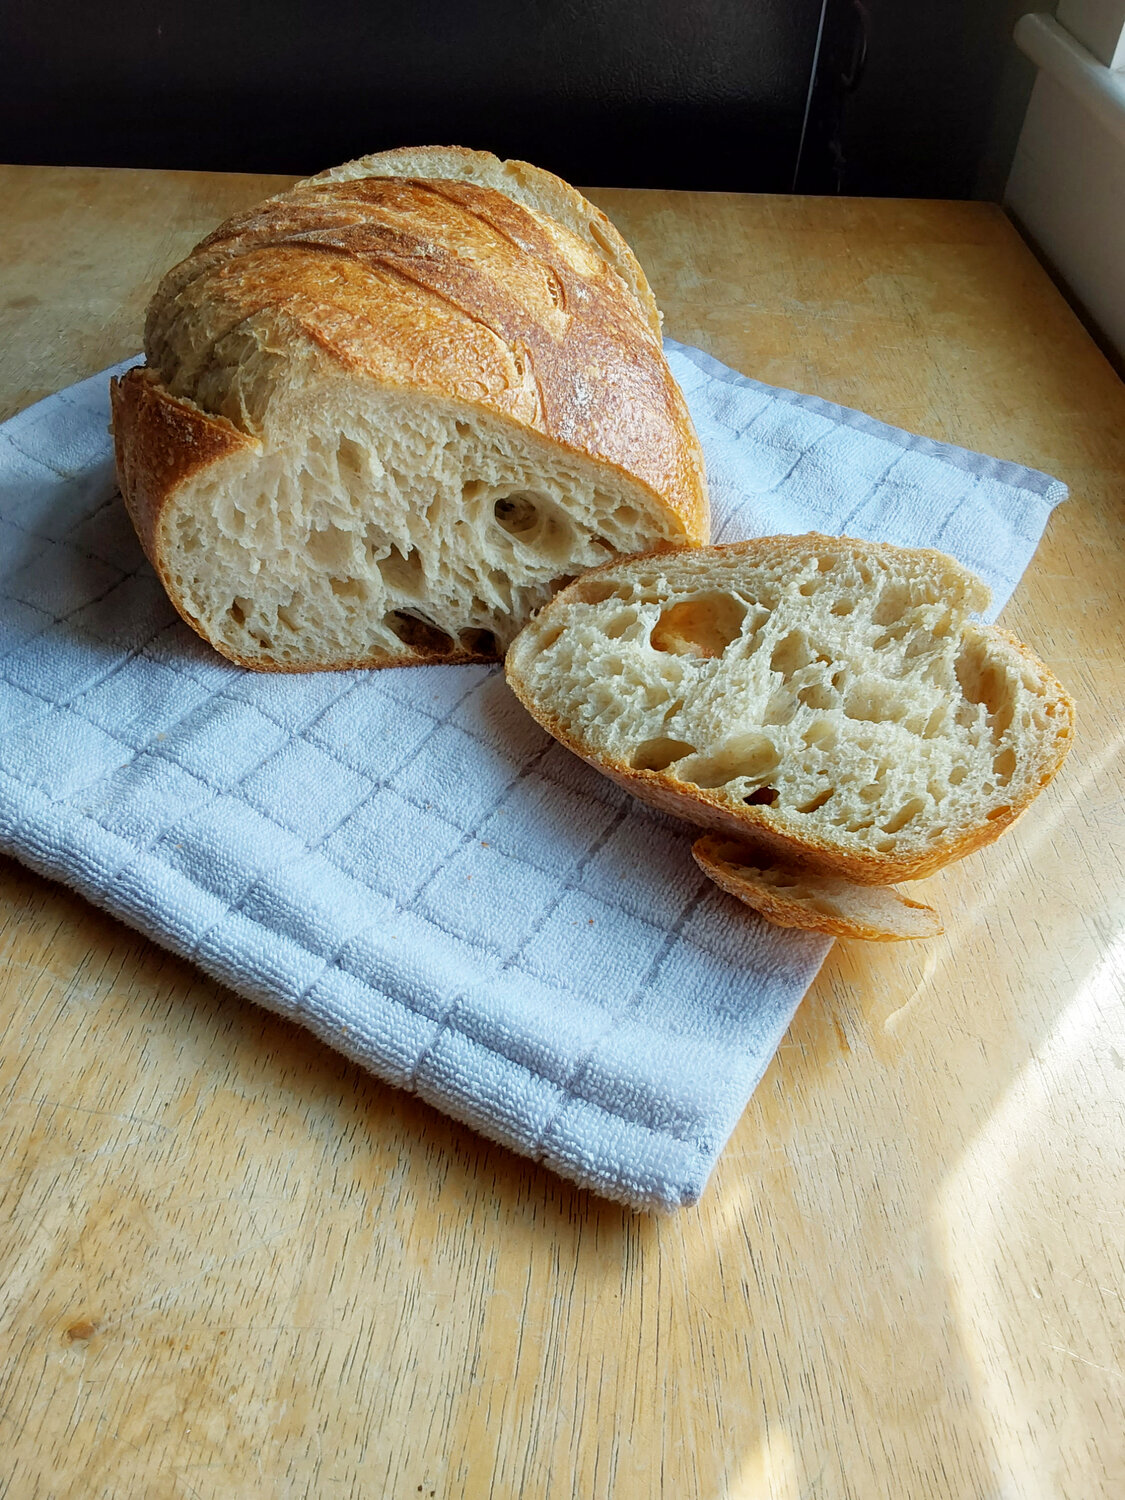 Born & Bread’s signature sourdough loaf has a tangy and complex flavor profile.